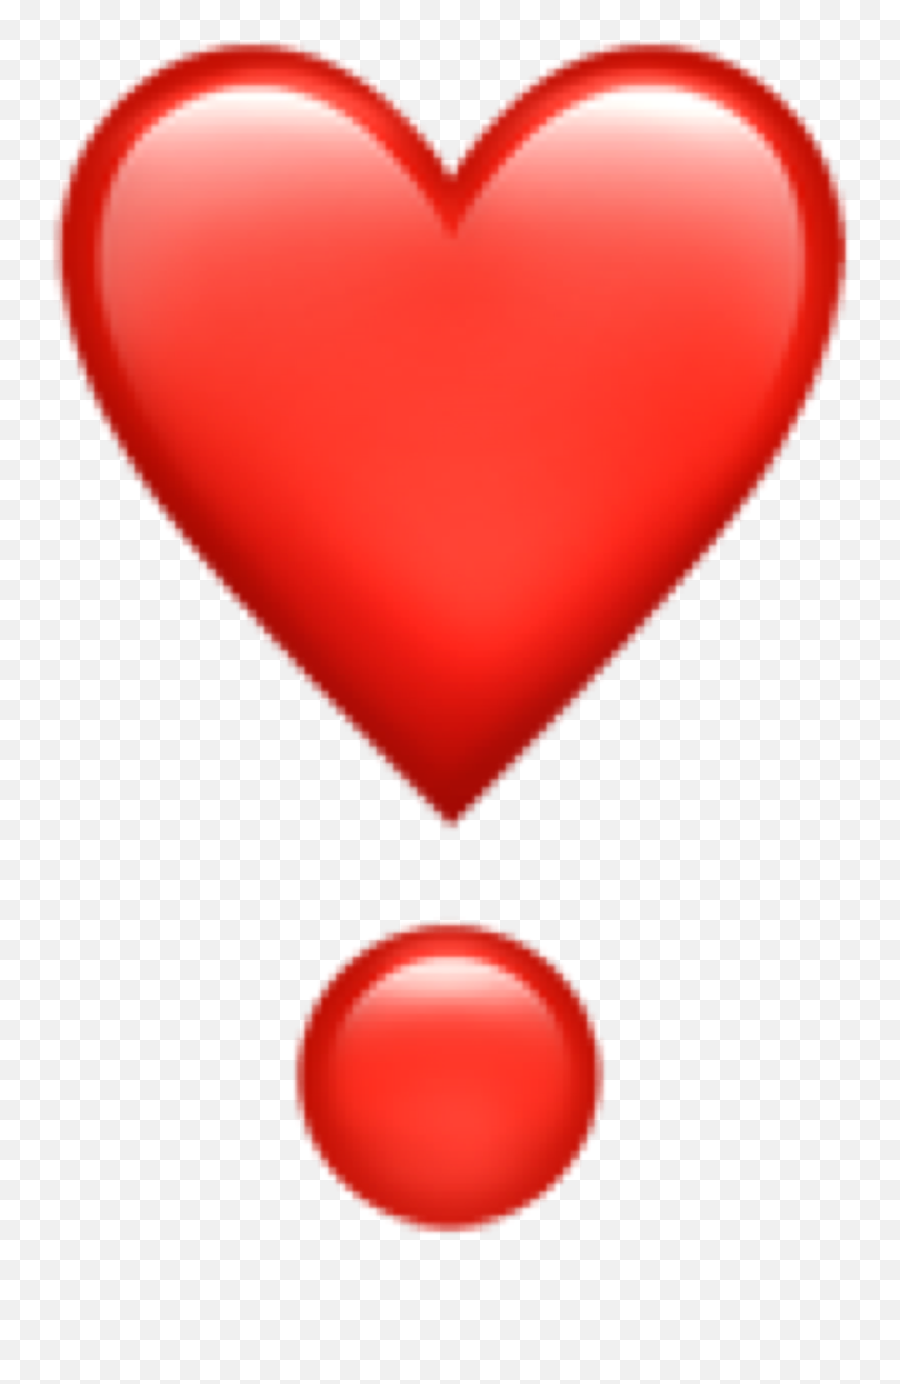 Apple Emoji Iphone Cute Heart Sticker By Tomurashigaraki,Lovel Letter Emoji